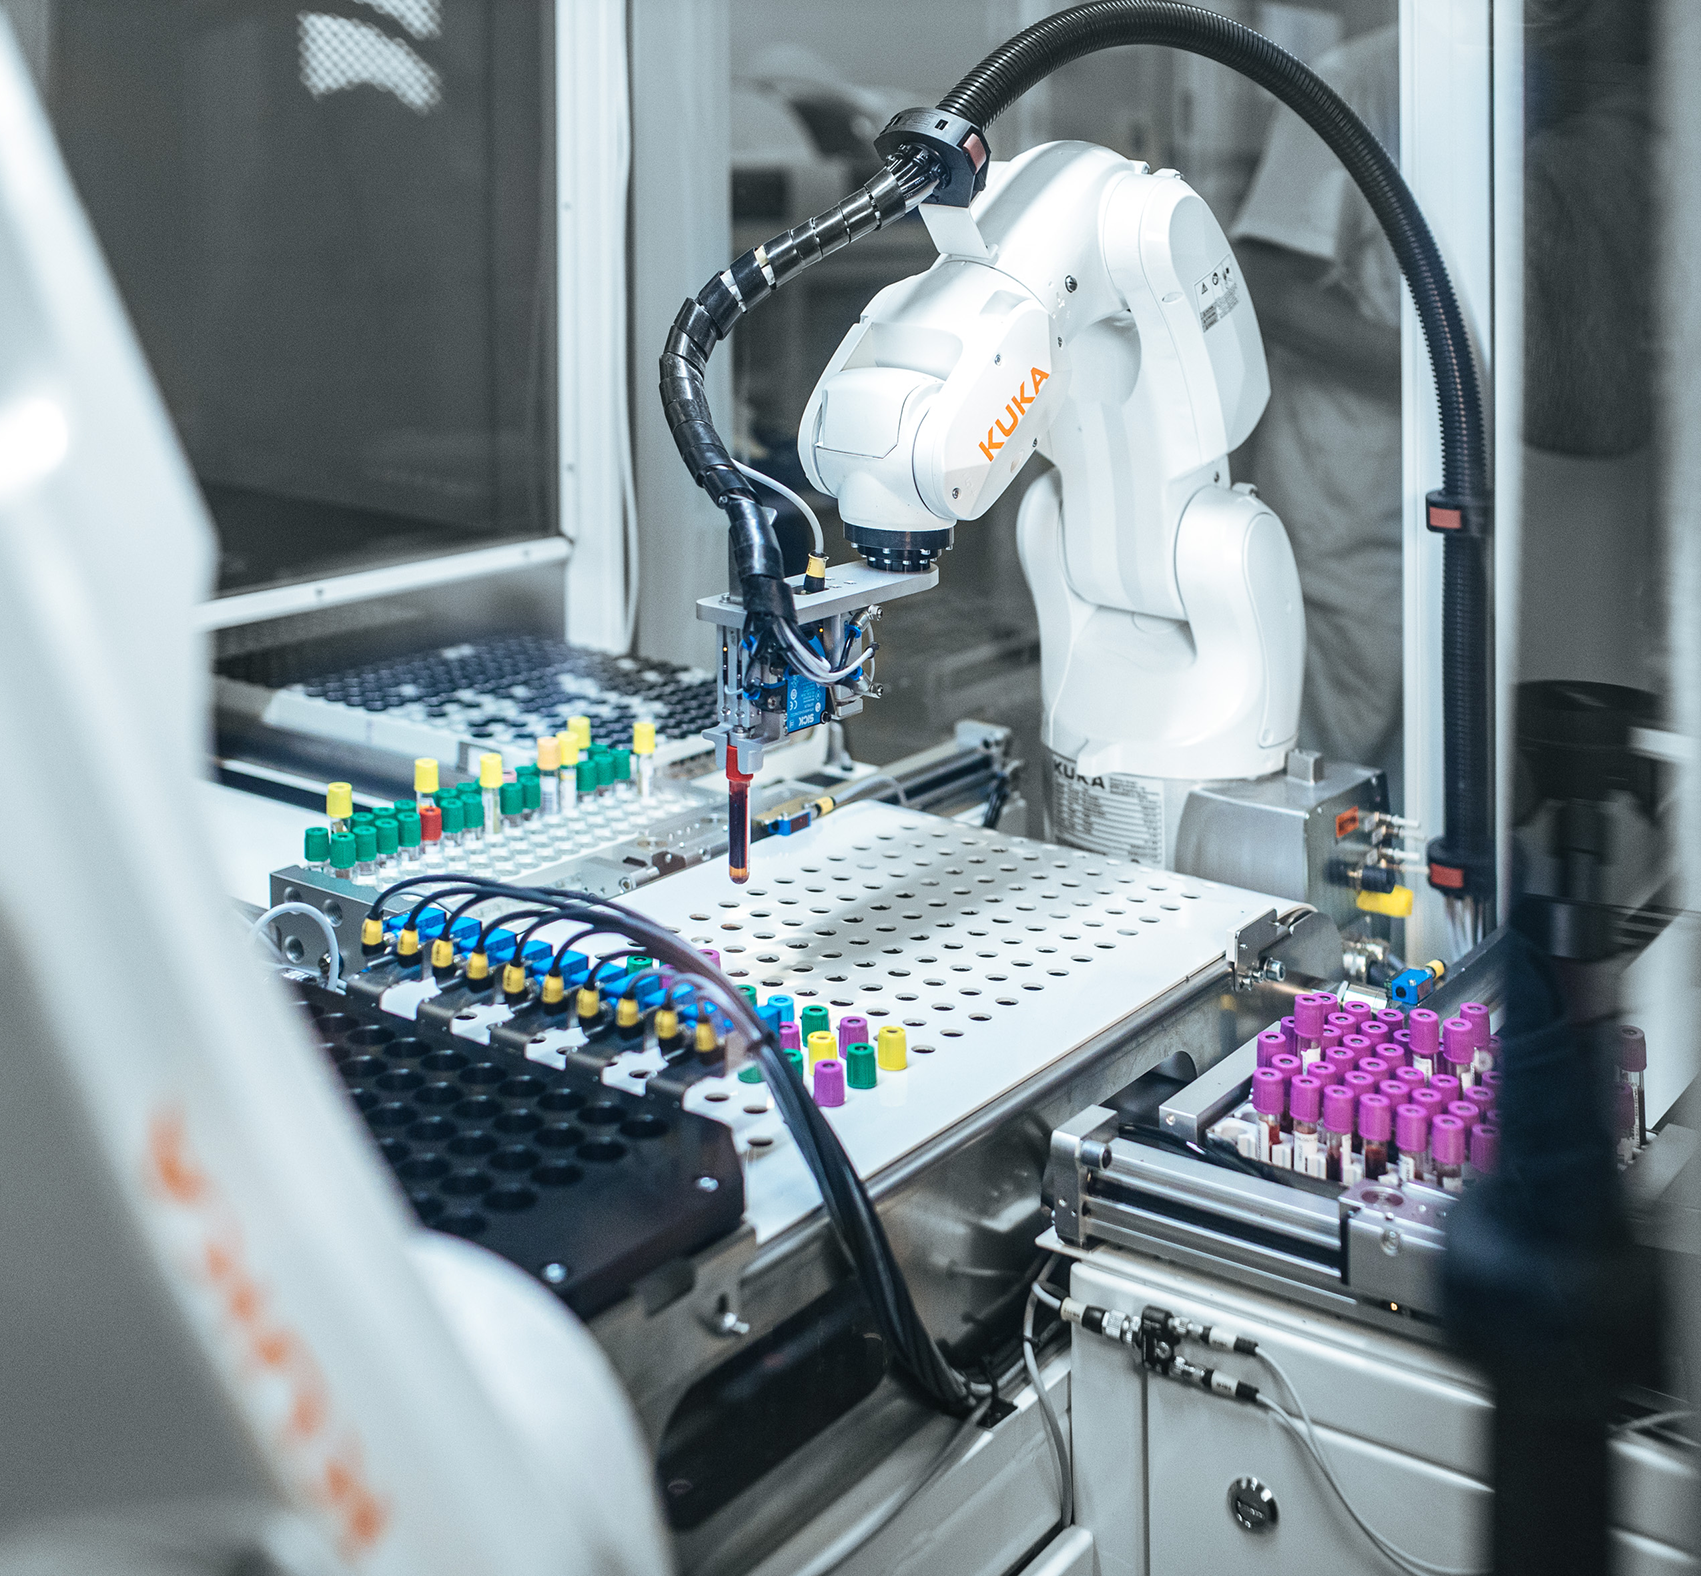 KUKA robots sort up to 3,000 blood samples per day